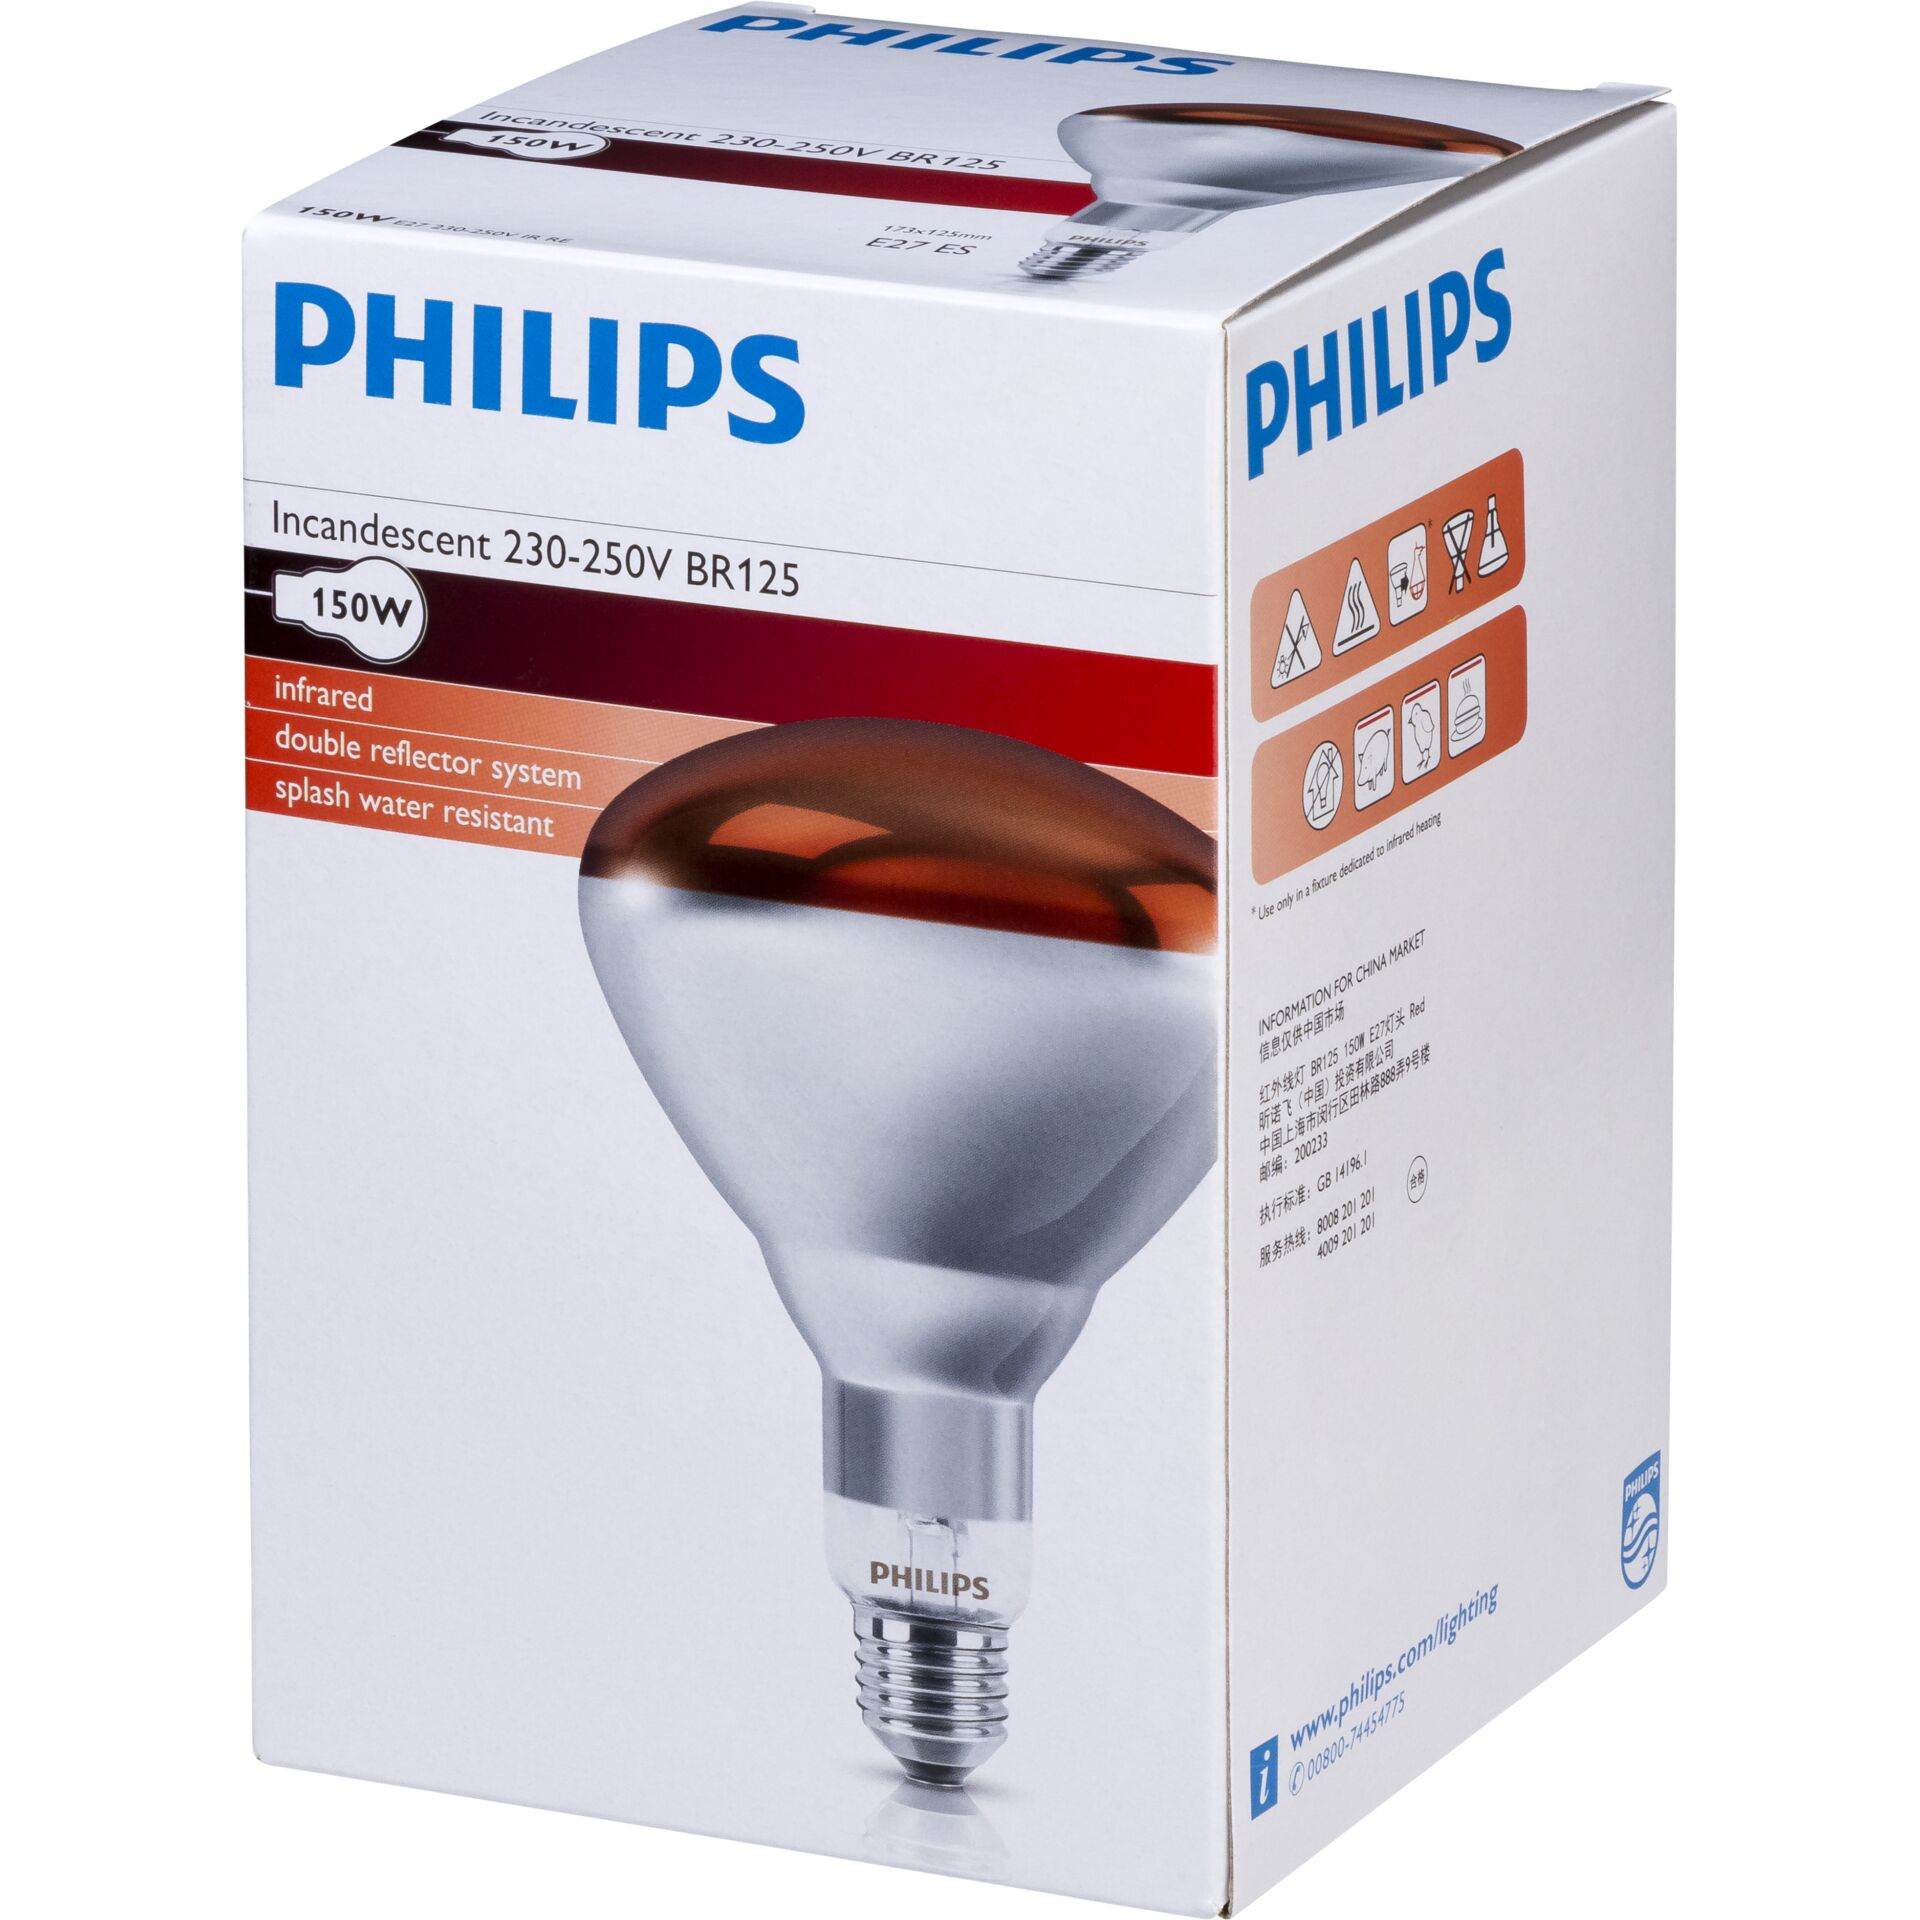 Philips Infrarotlampe BR125 IR 150W E27 230-250V Red